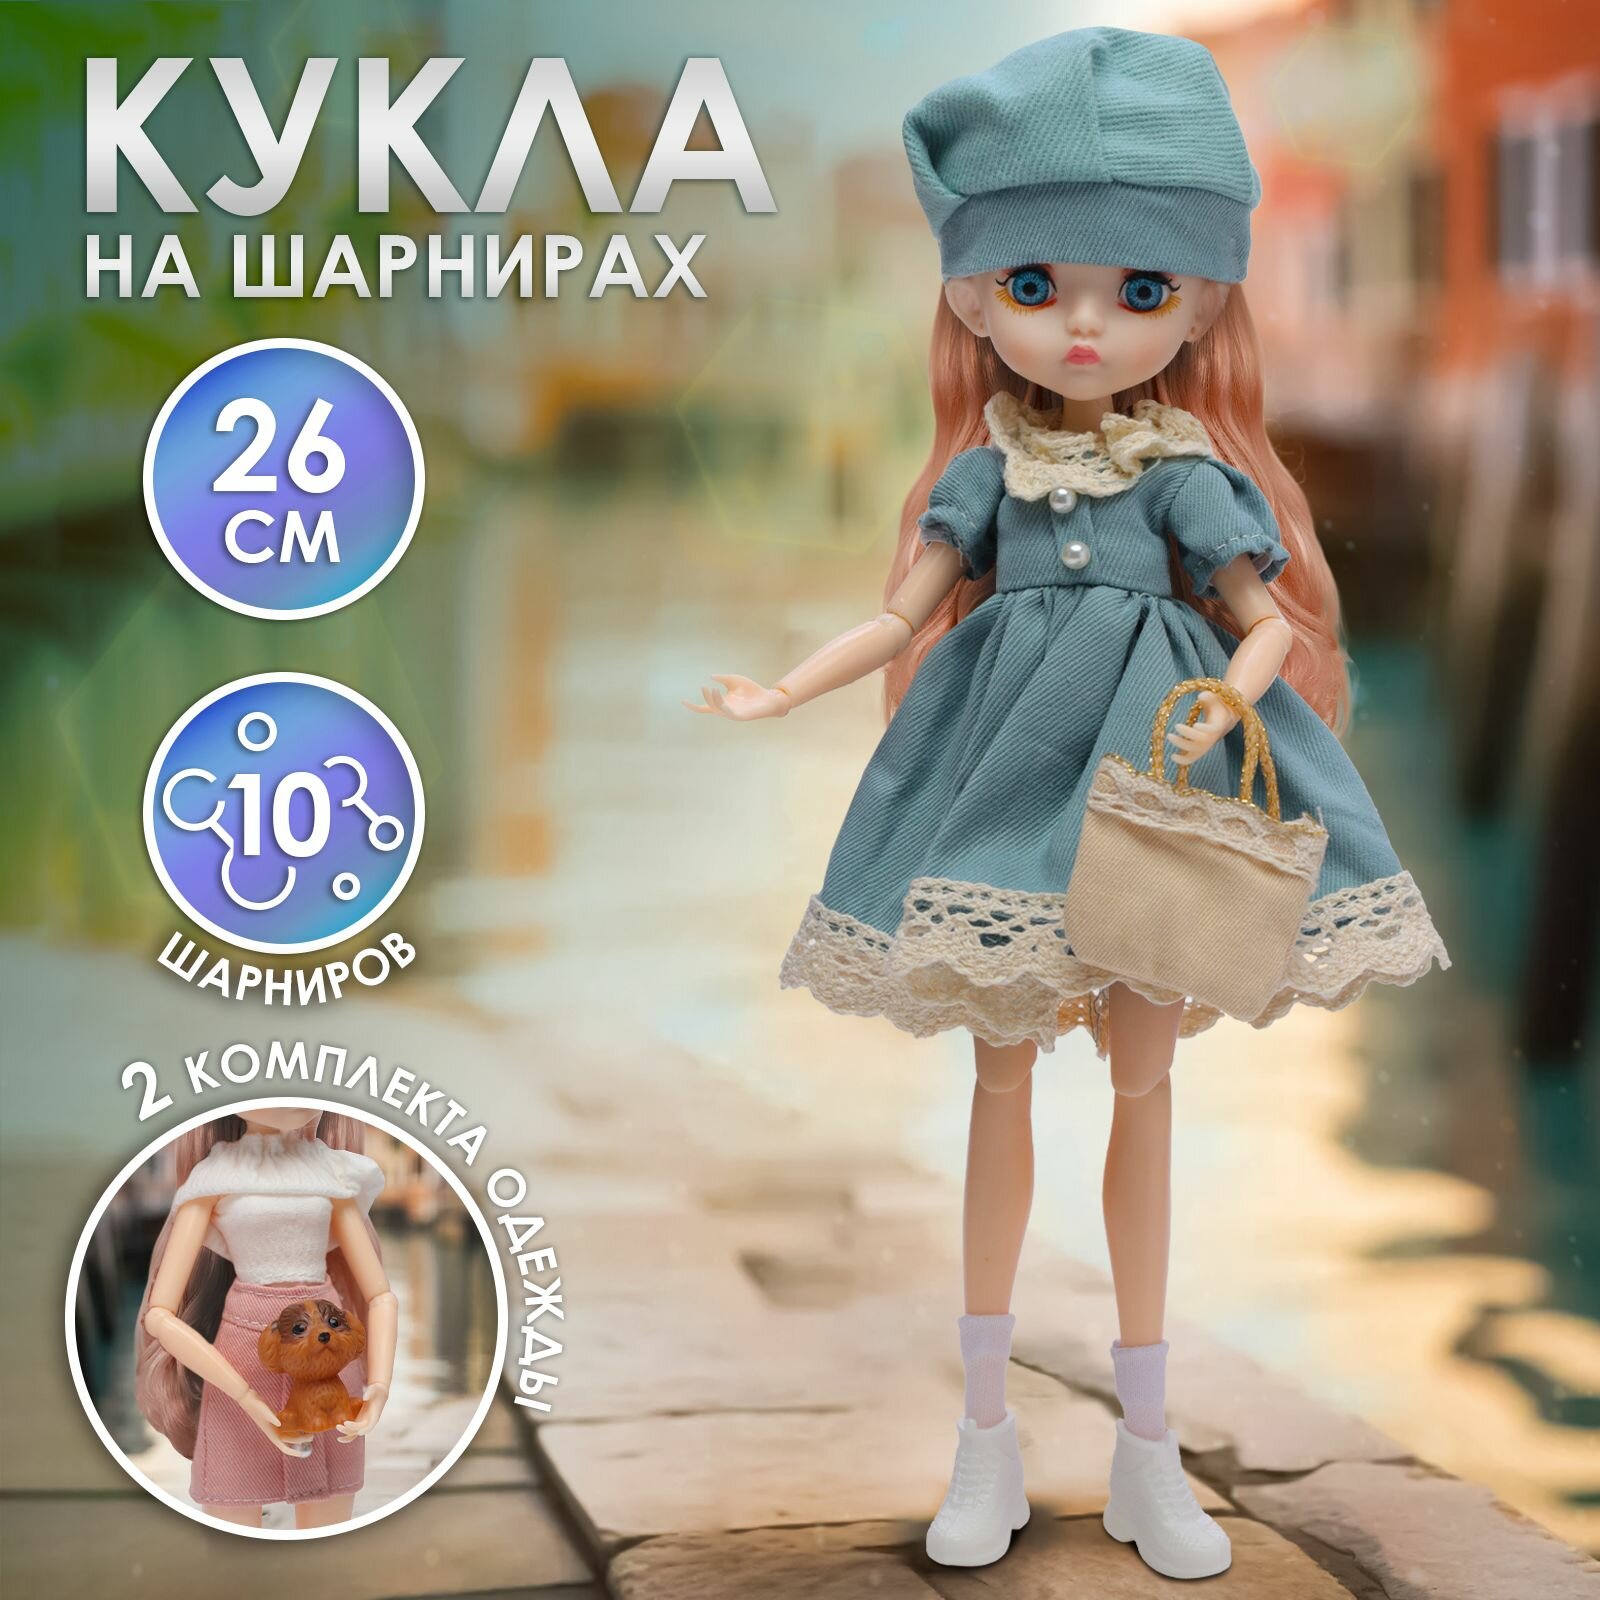 Кукла шарнирная WiMi с одеждой и аксессуарами, бжд на шарнирах